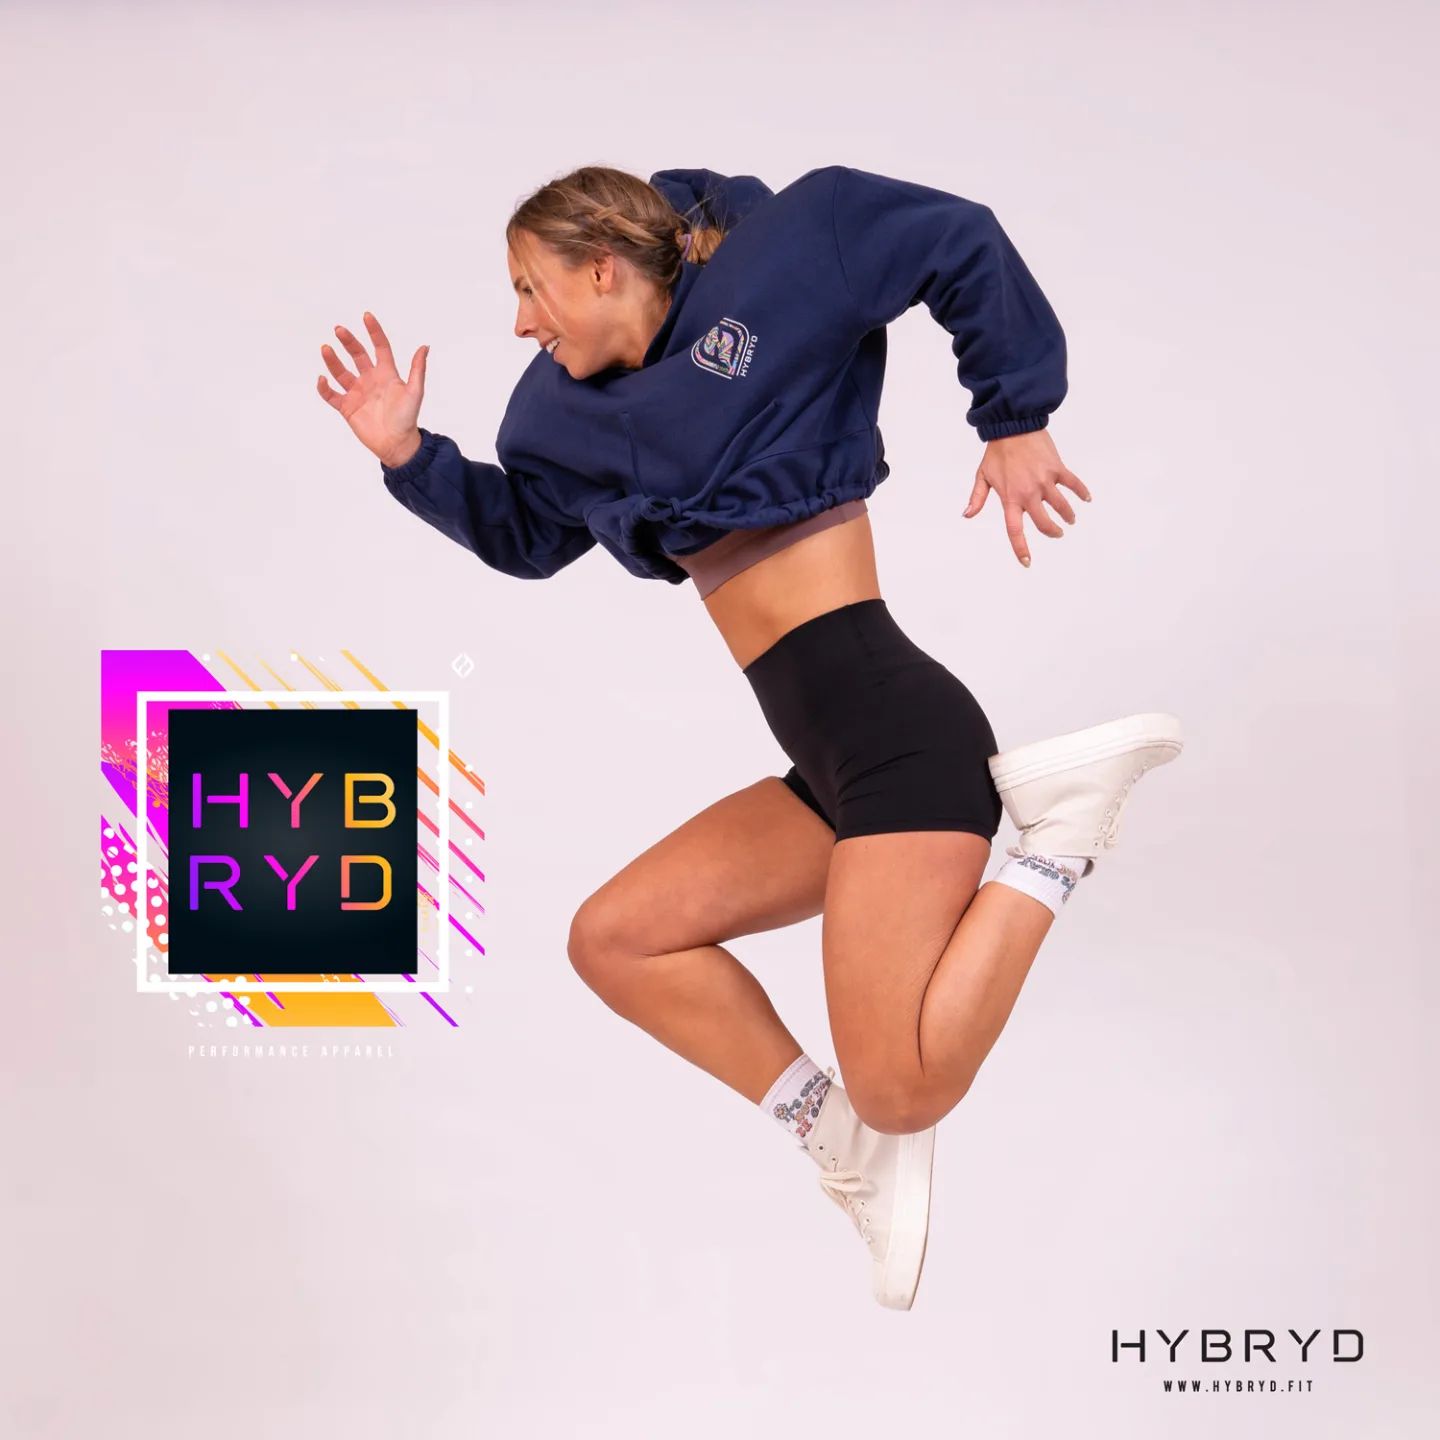 Hybryd Brand